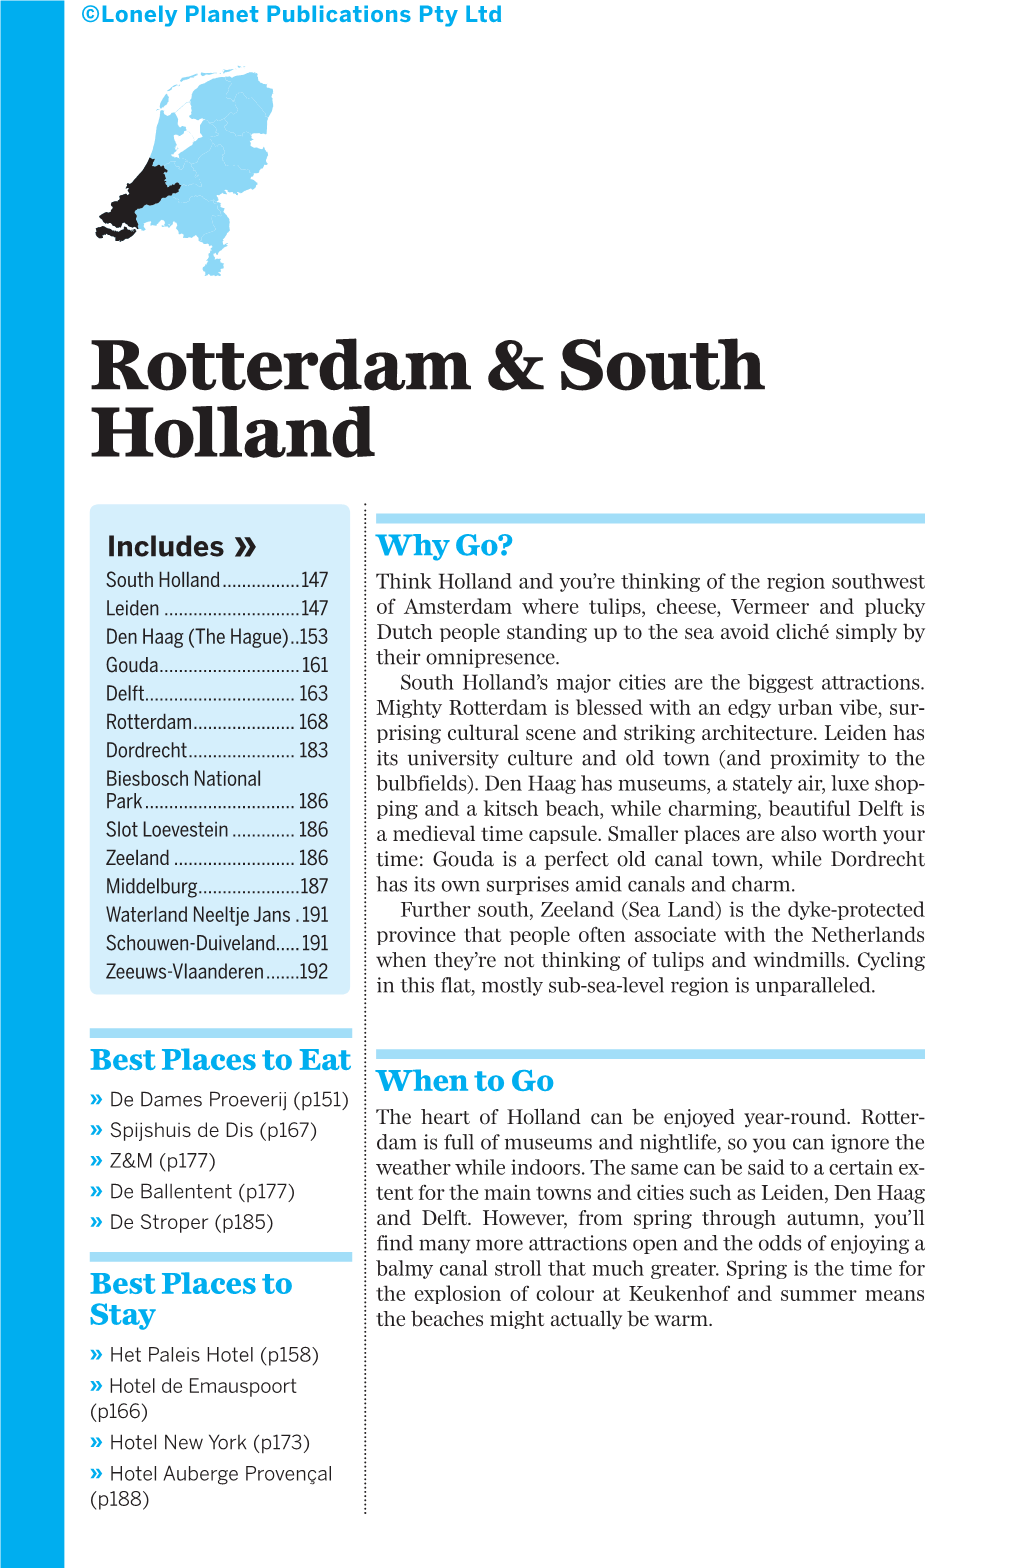 Rotterdam & South Holland